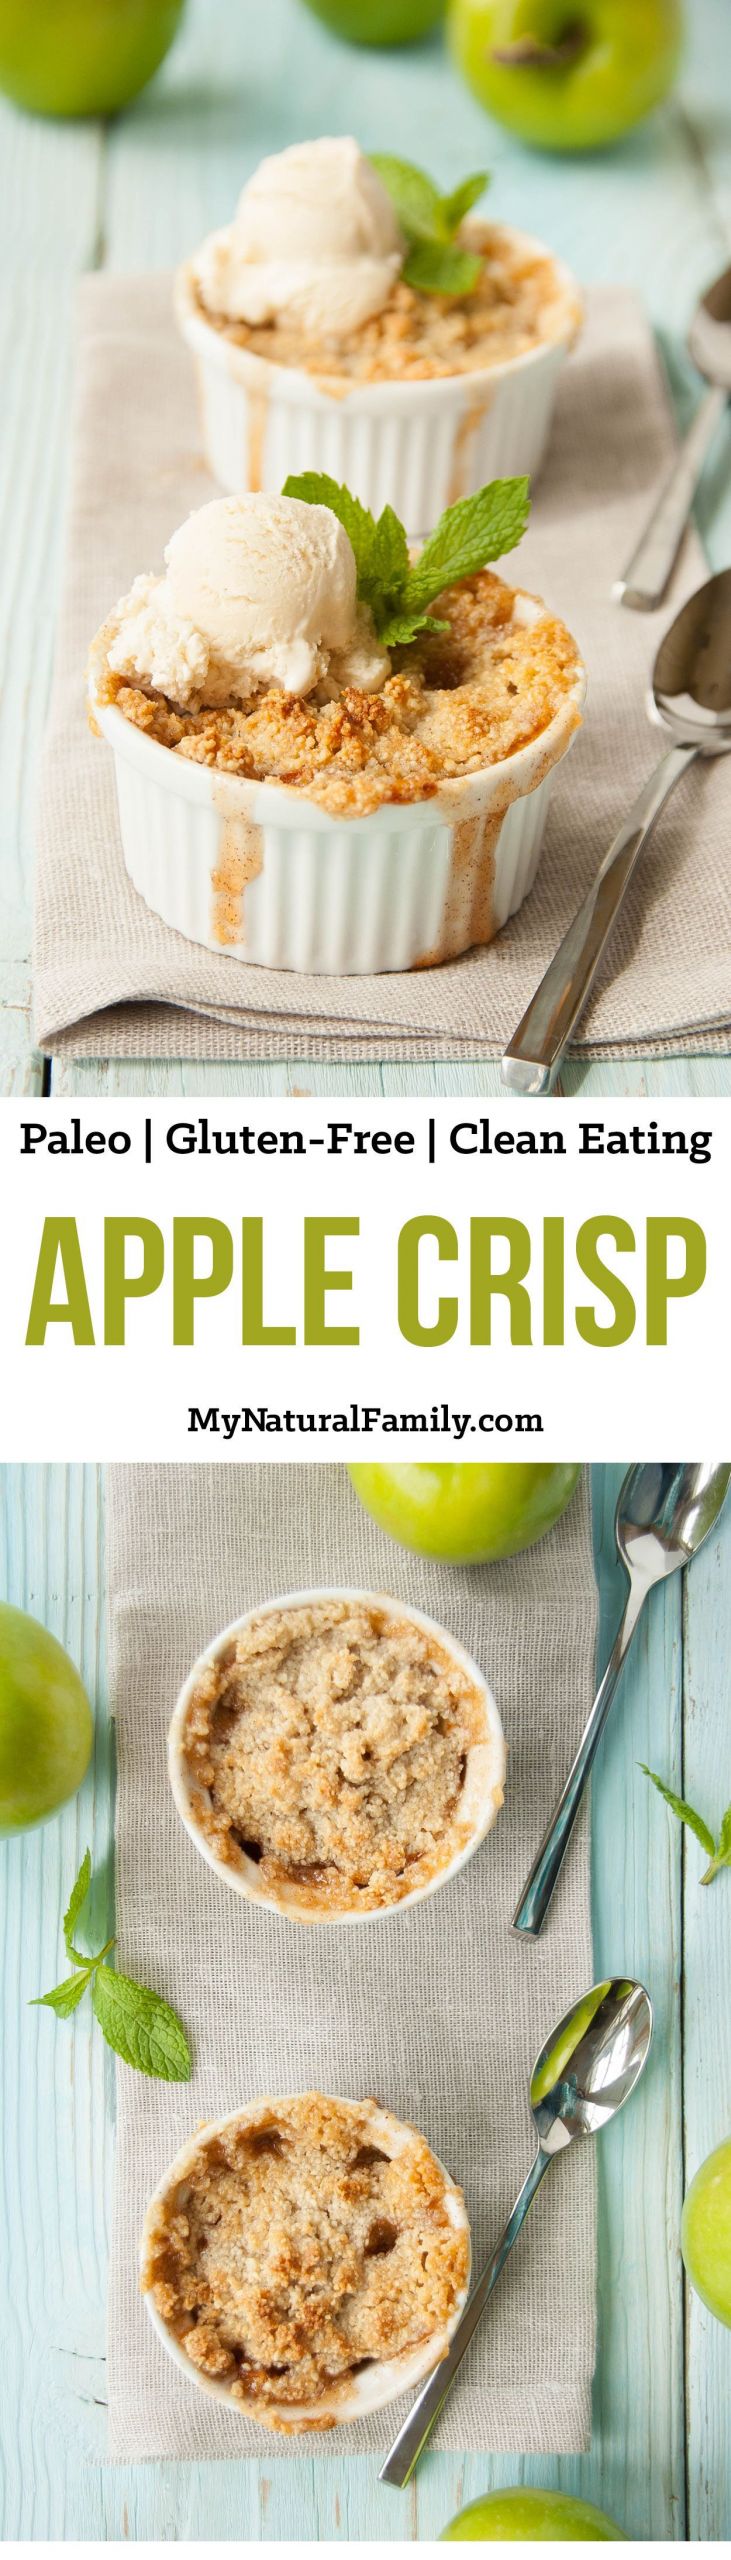 Paleo Apple Recipes
 Paleo Apple Crisp Recipe